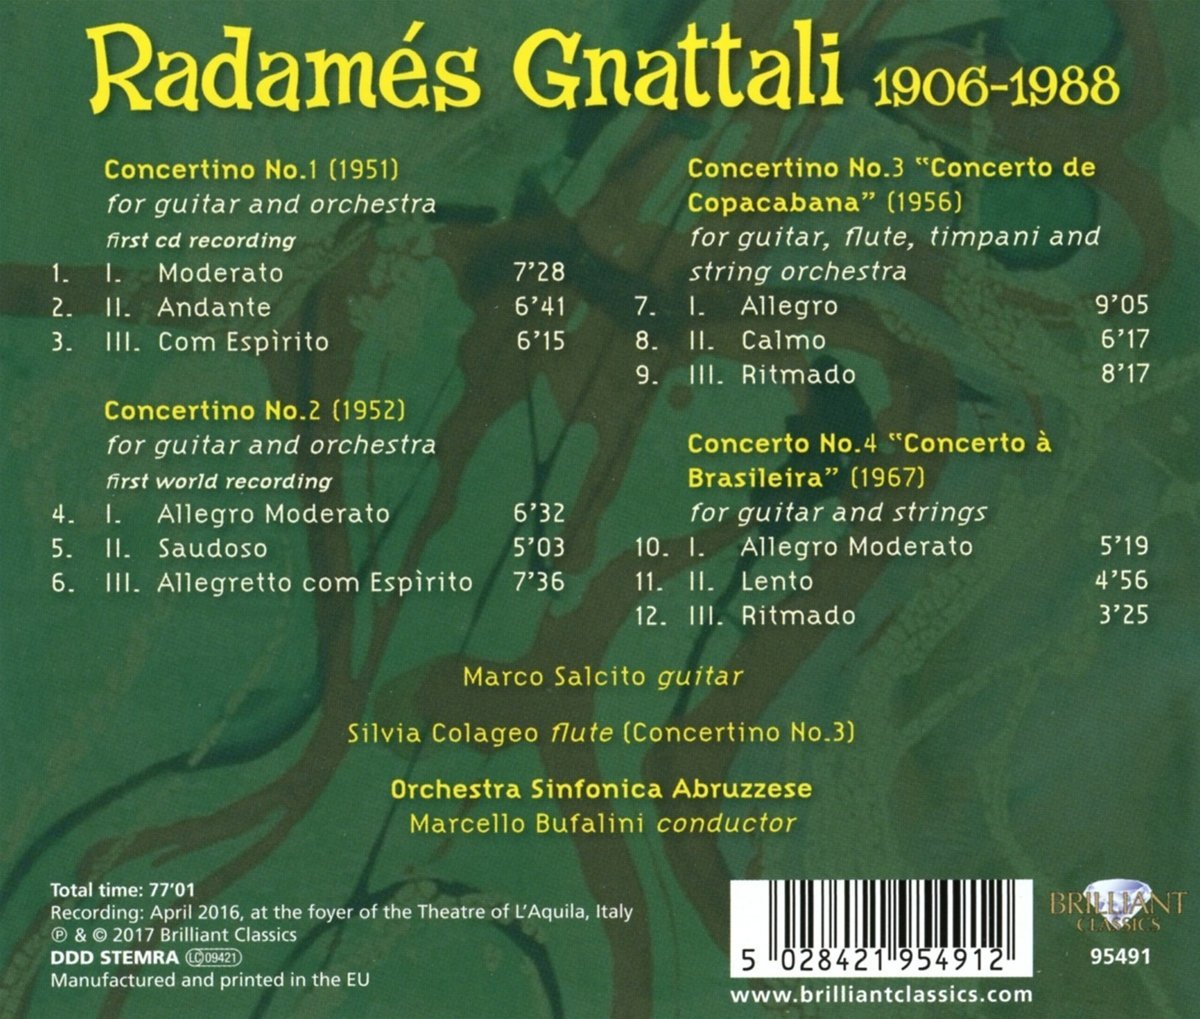 Radamés Gnattali - Concertinos for Guitar and Orchestra, Marco Salcito